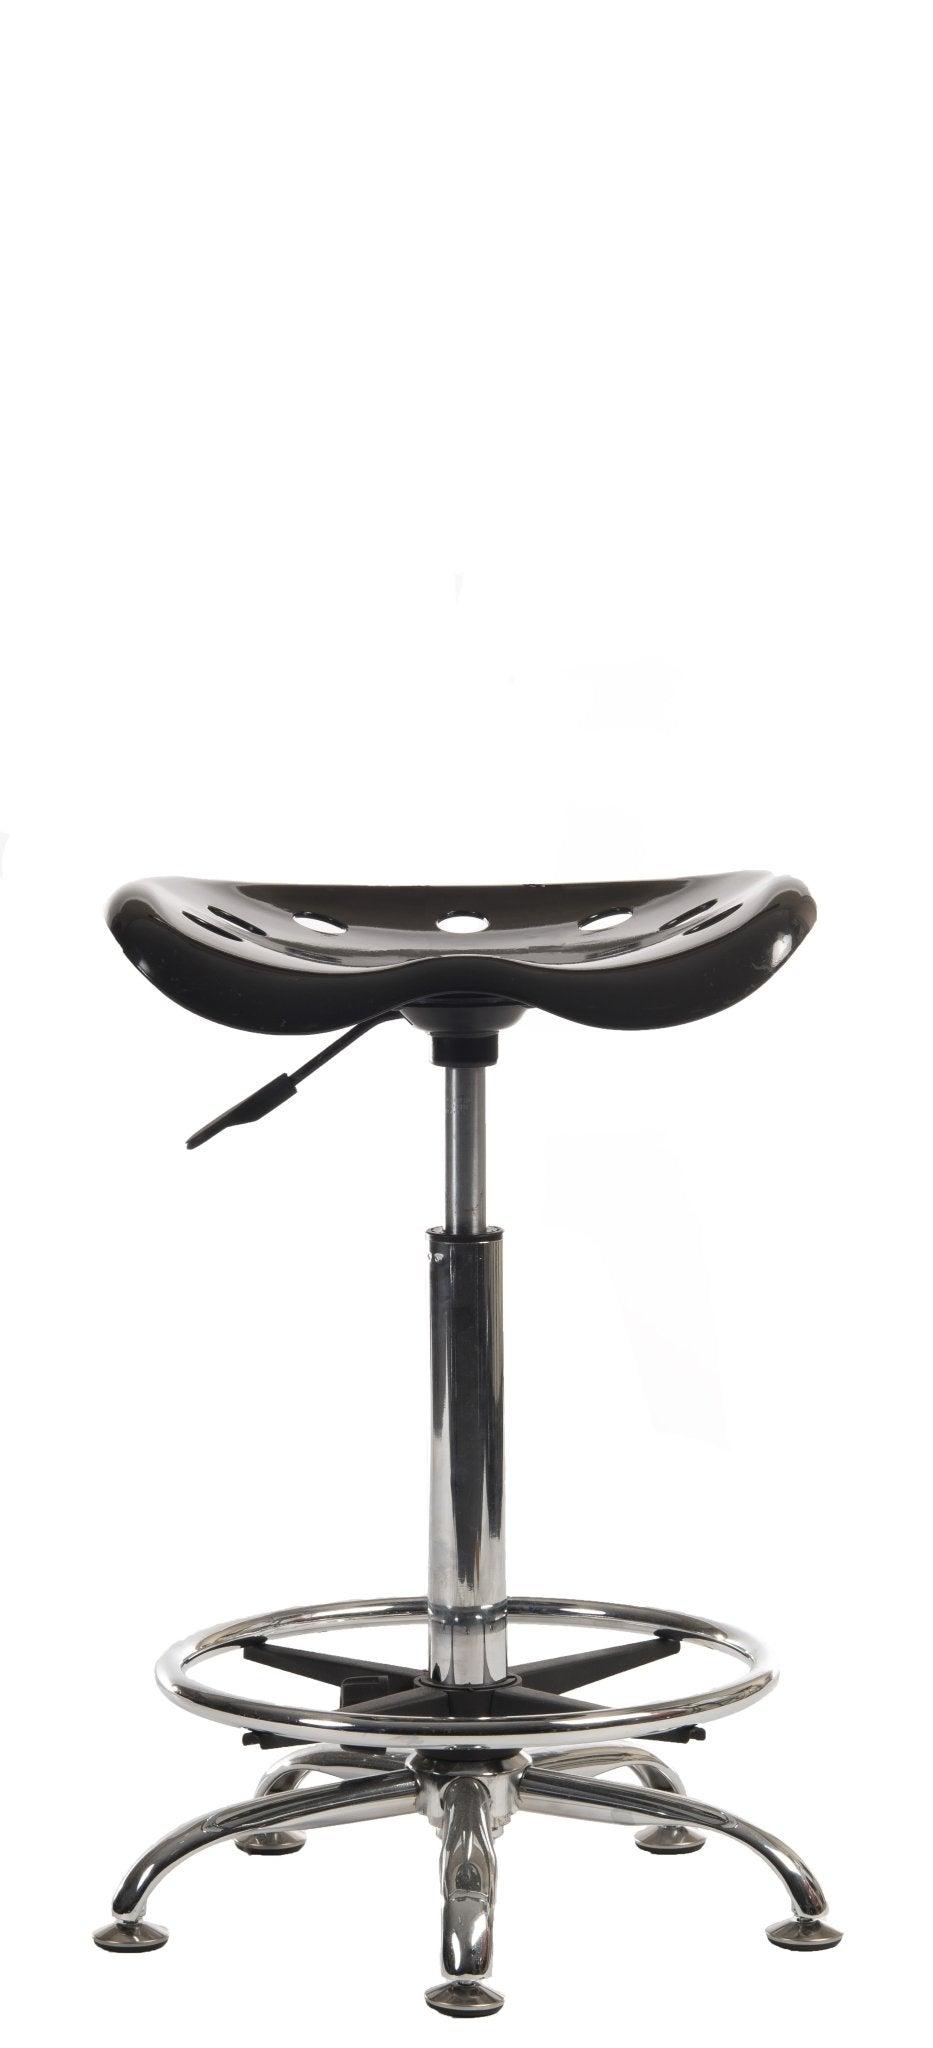 Tek stool (black) - crimblefest furniture - image 1